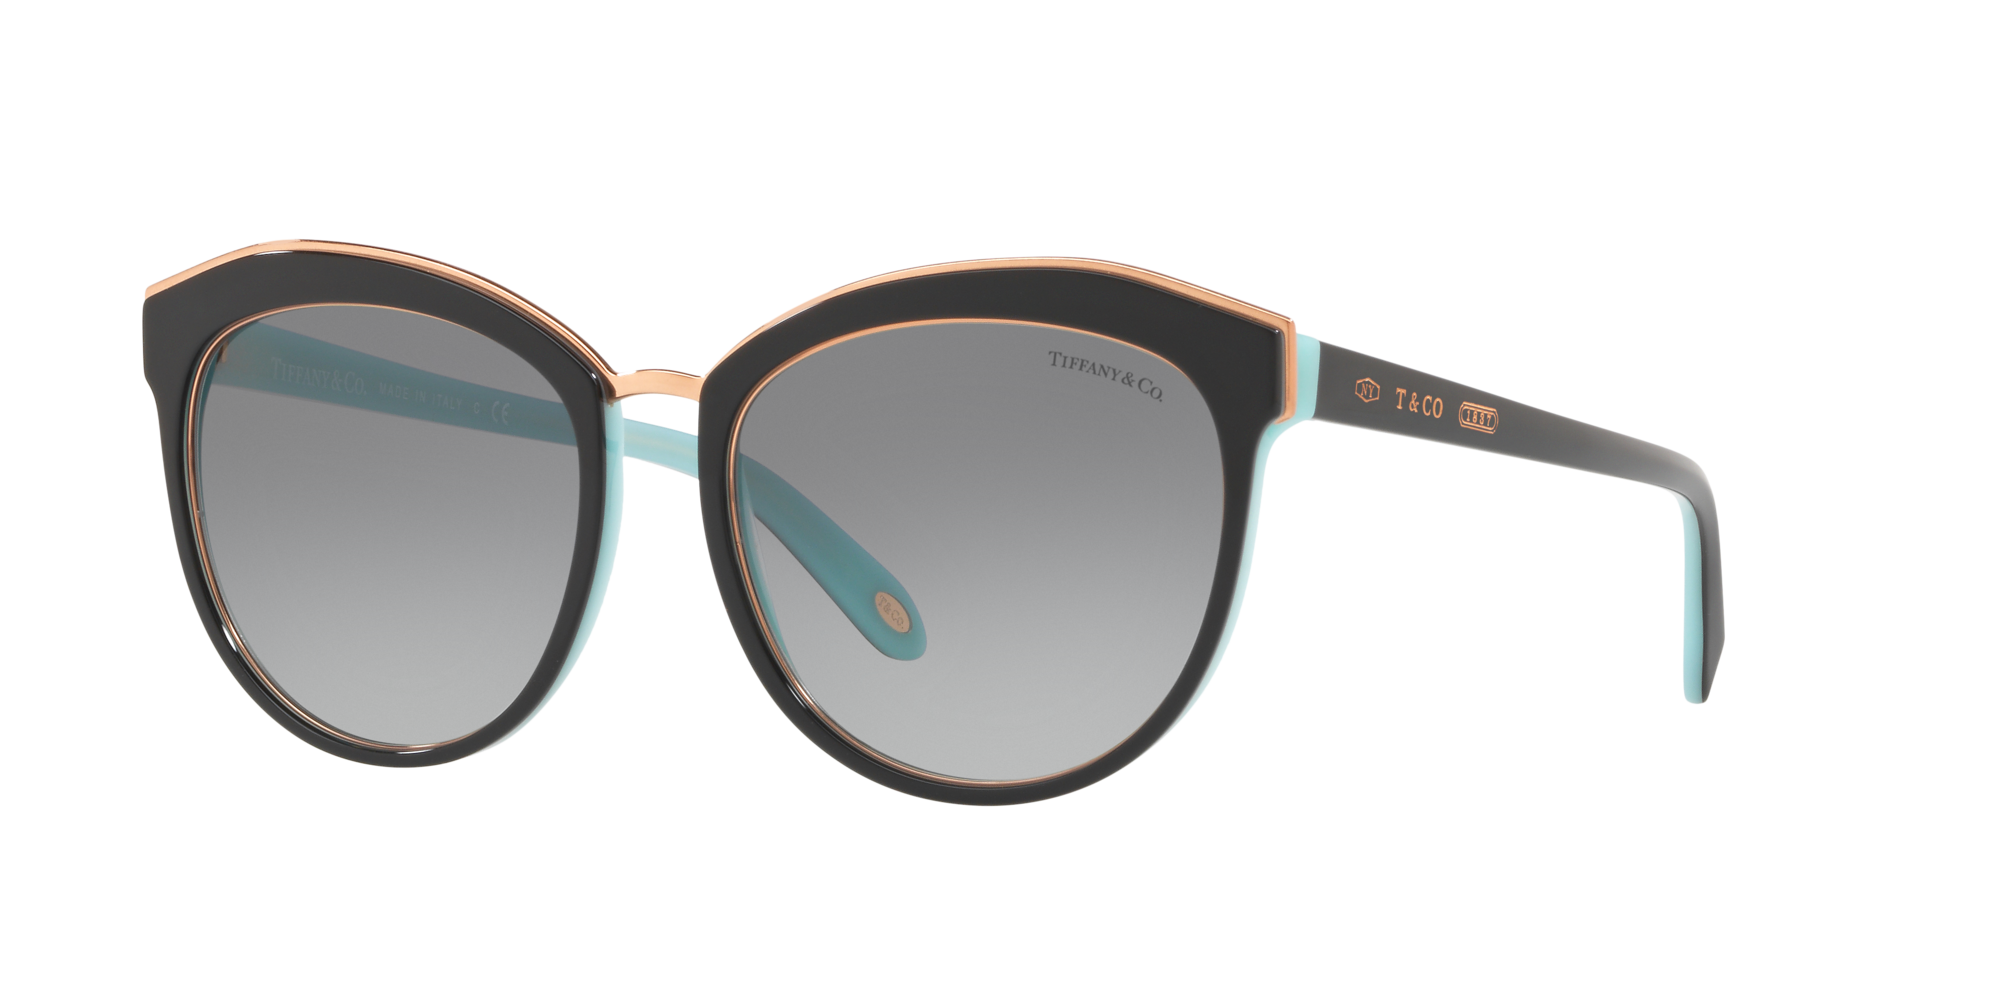 tiffany sunglasses 2019